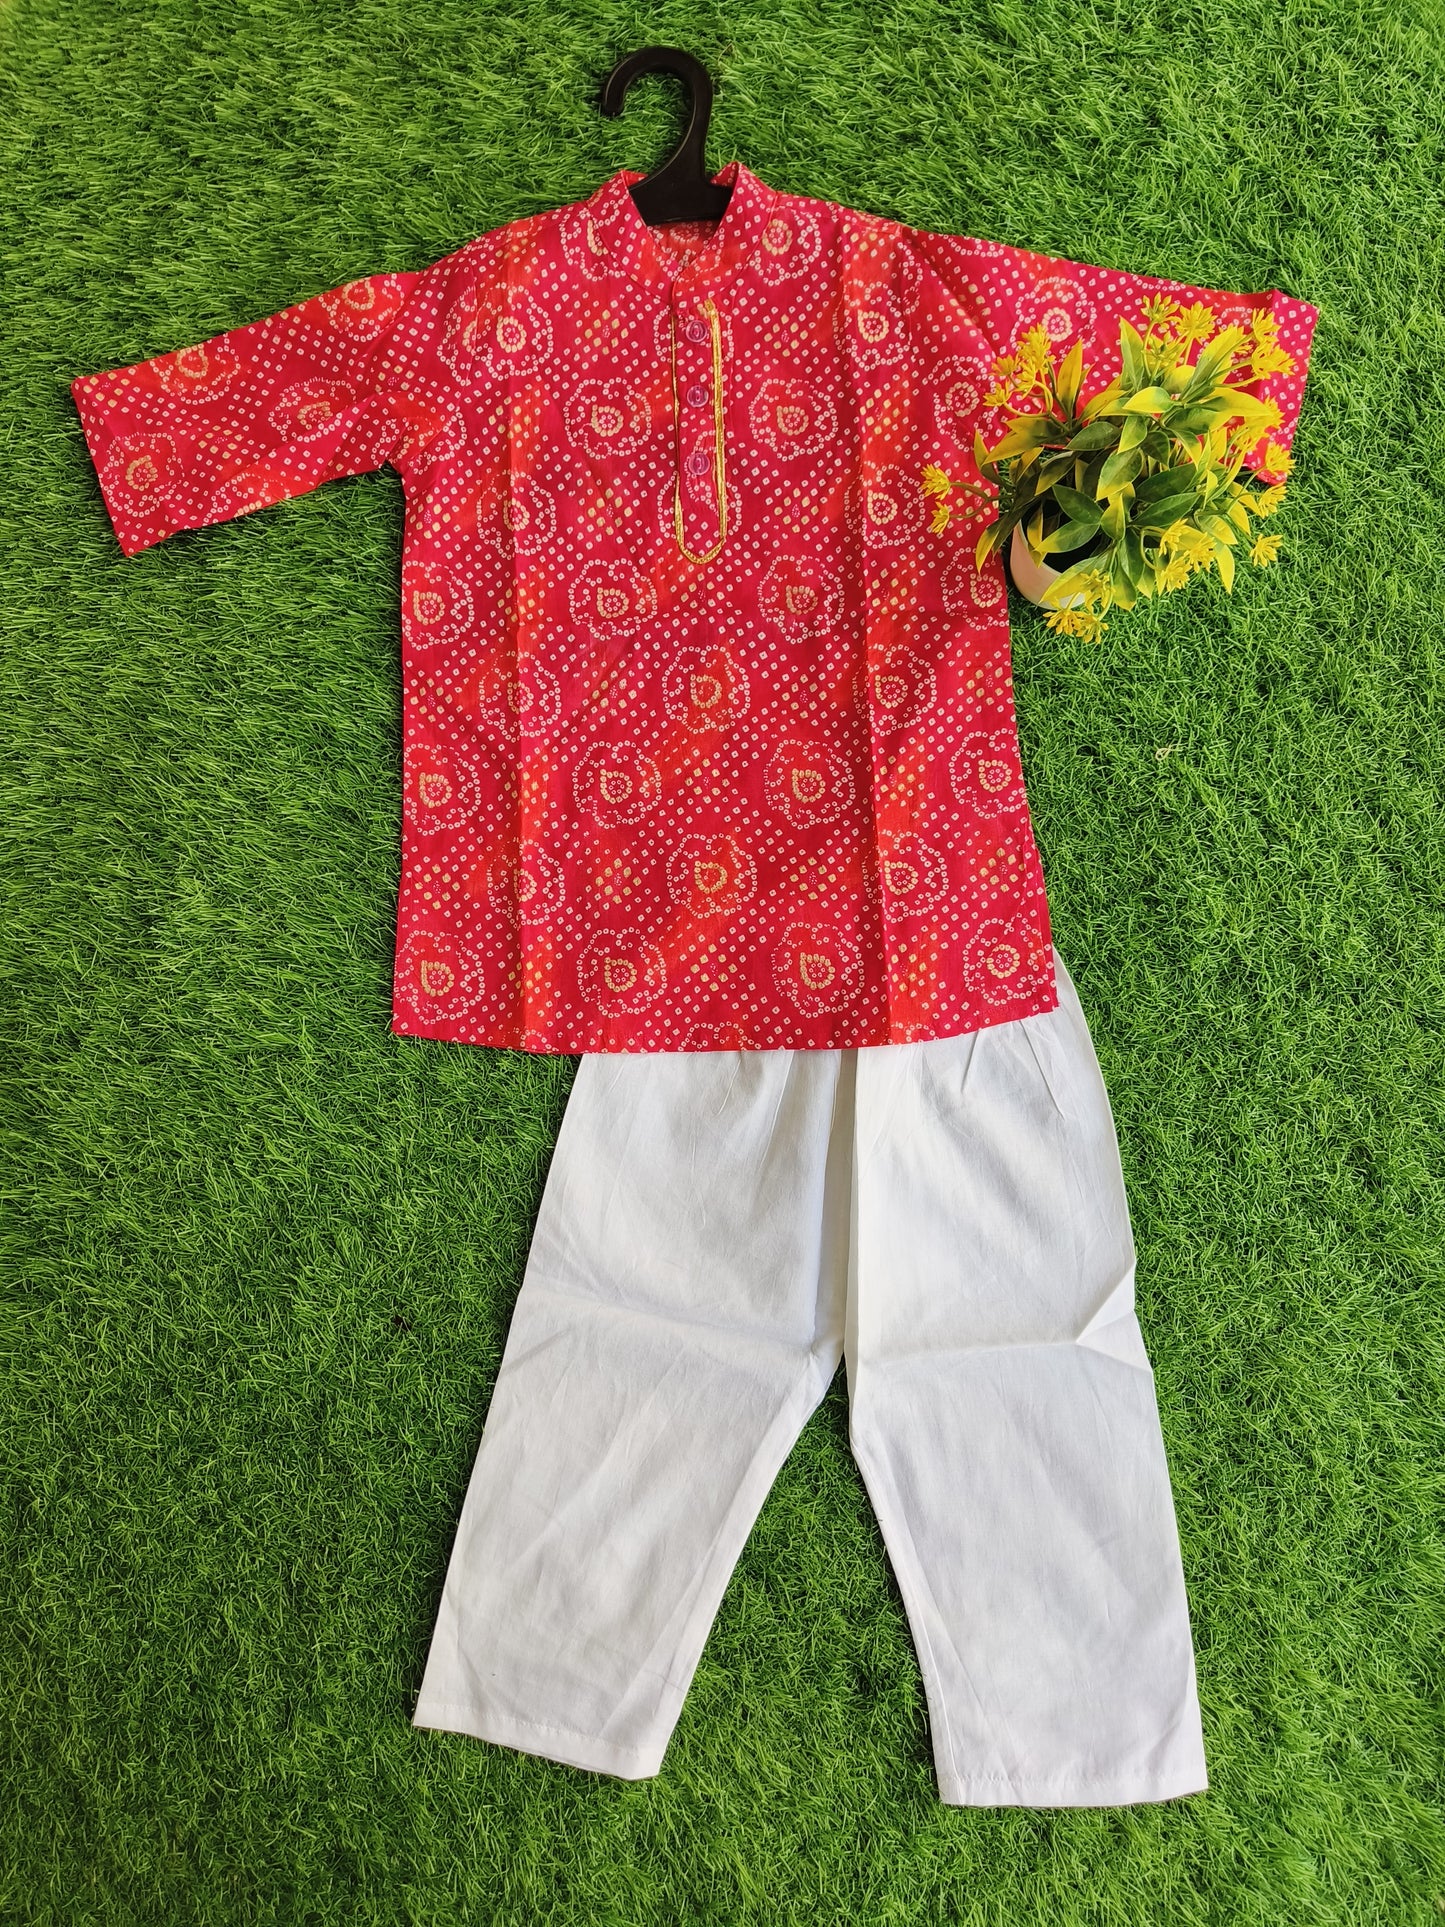 Glossy Reddish Printed Cotton Kurta Pajama Outfit Set for Boy